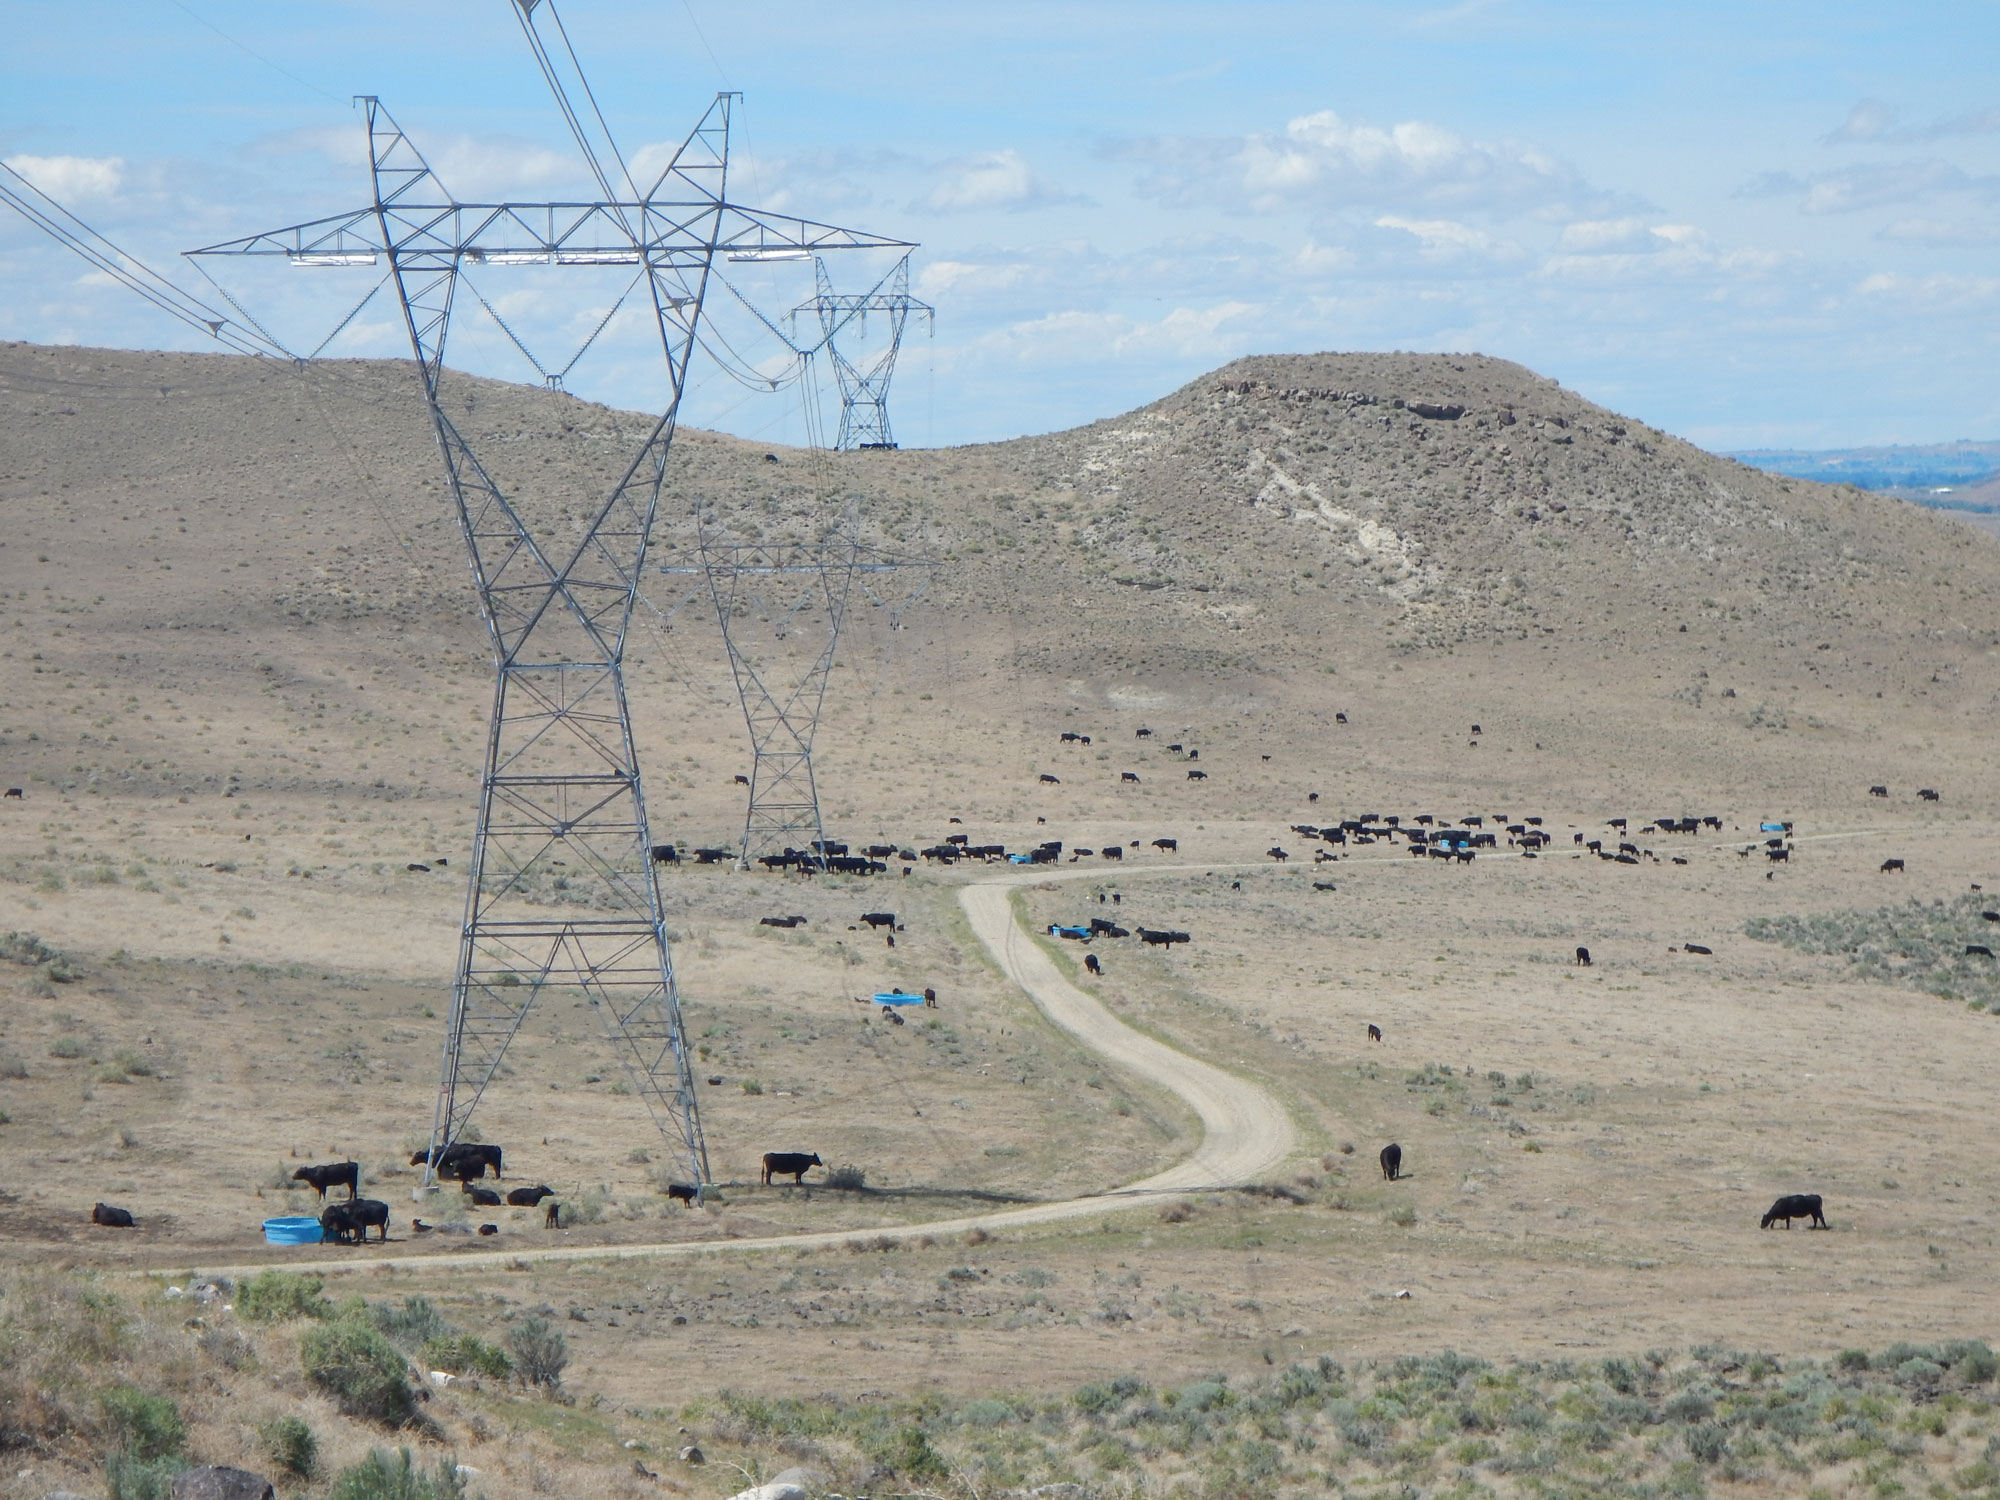 Cattle grazing in a dry area to create a firebreak